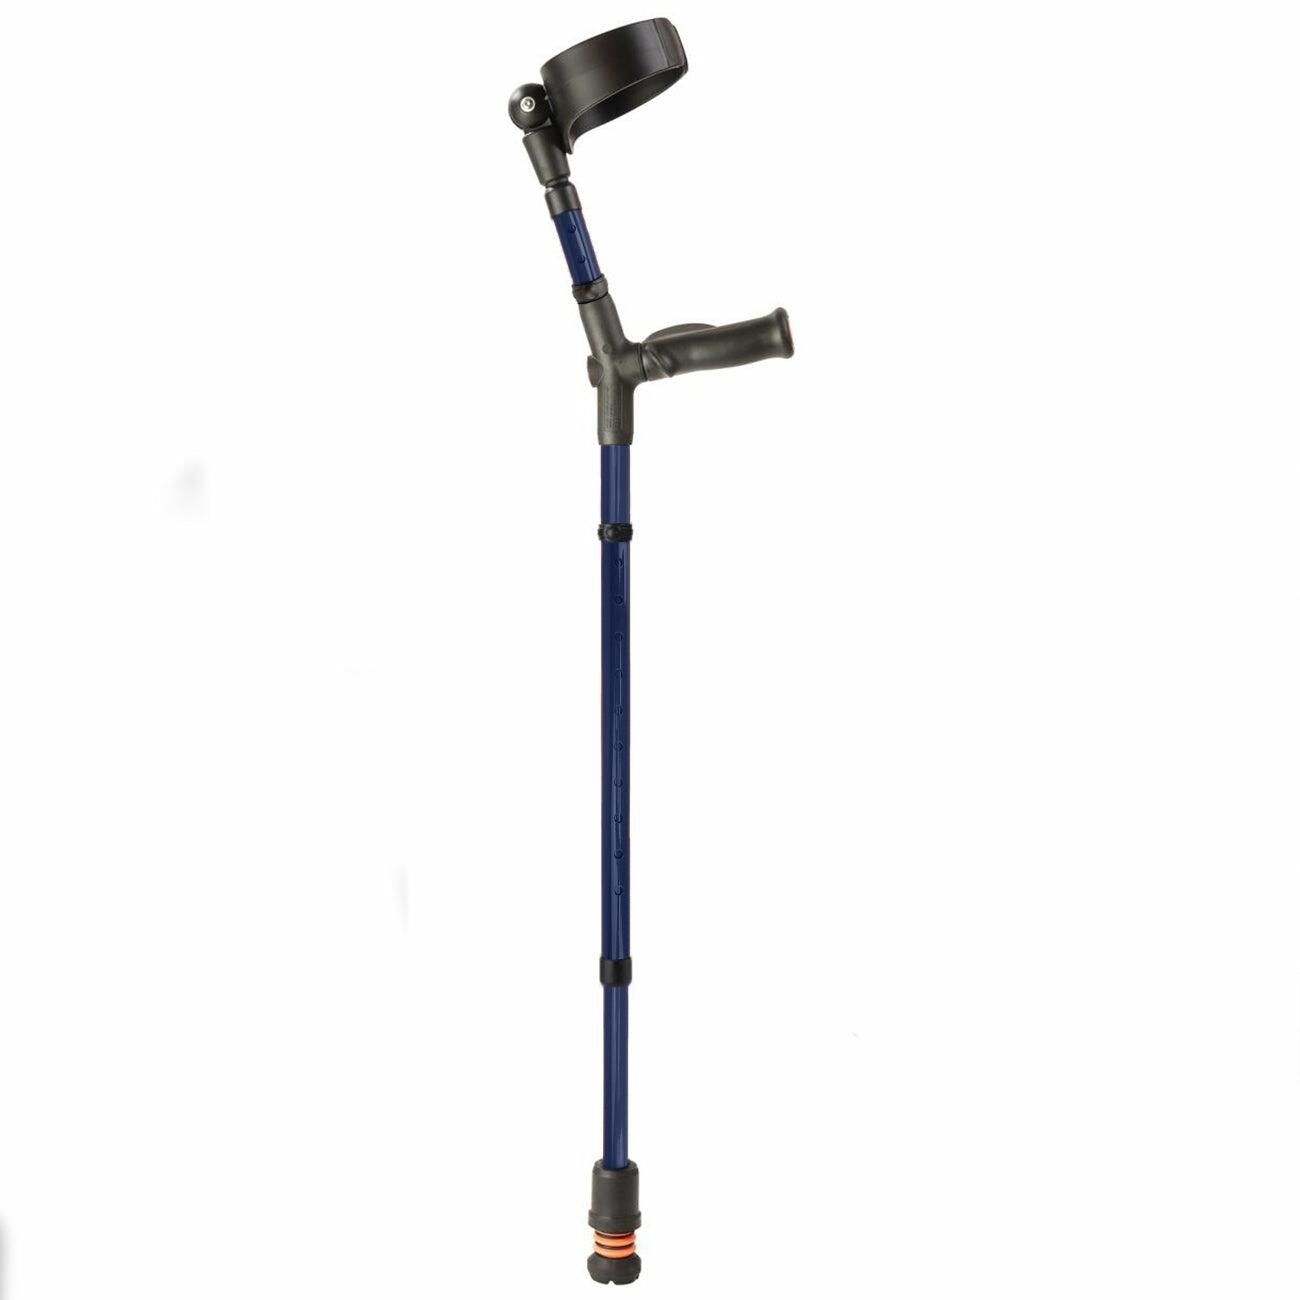 A single blue Flexyfoot Comfort Grip Open Cuff Crutch